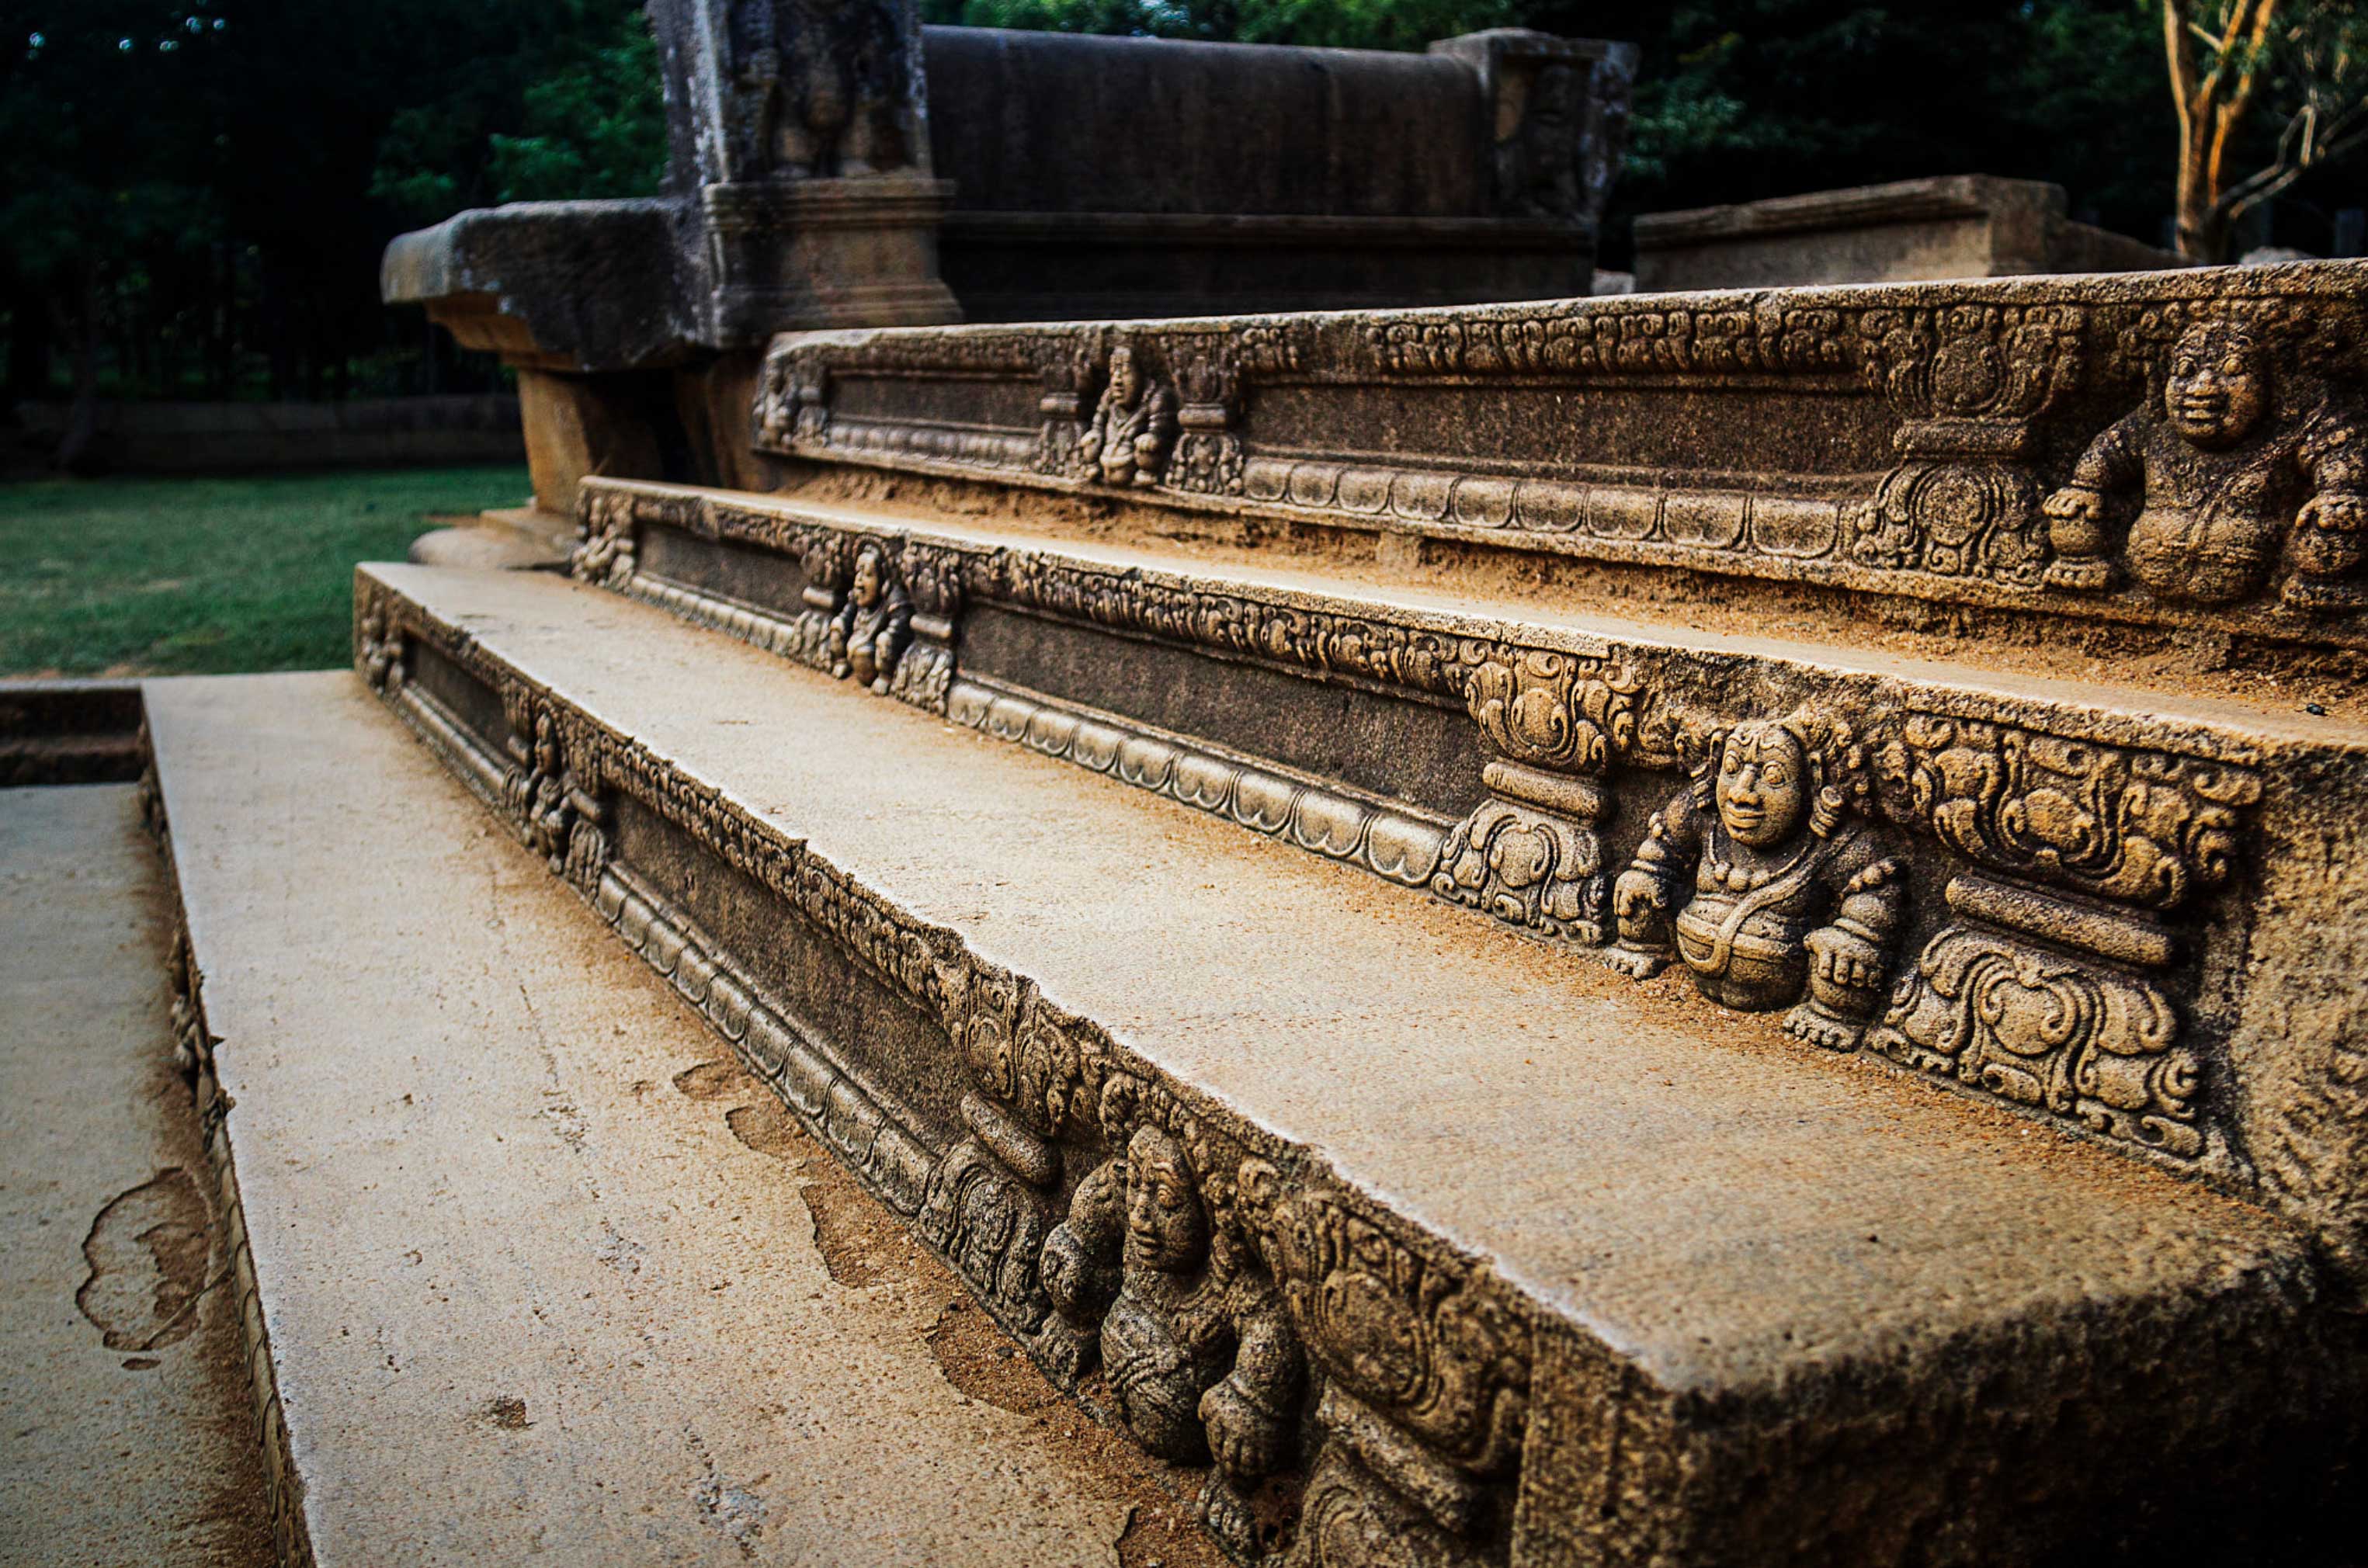 King Mahasen's Doorstep - The intricately carved steps of King Mahasen's 3rd century BC palace, Anuradhapura, Sri Lanka.